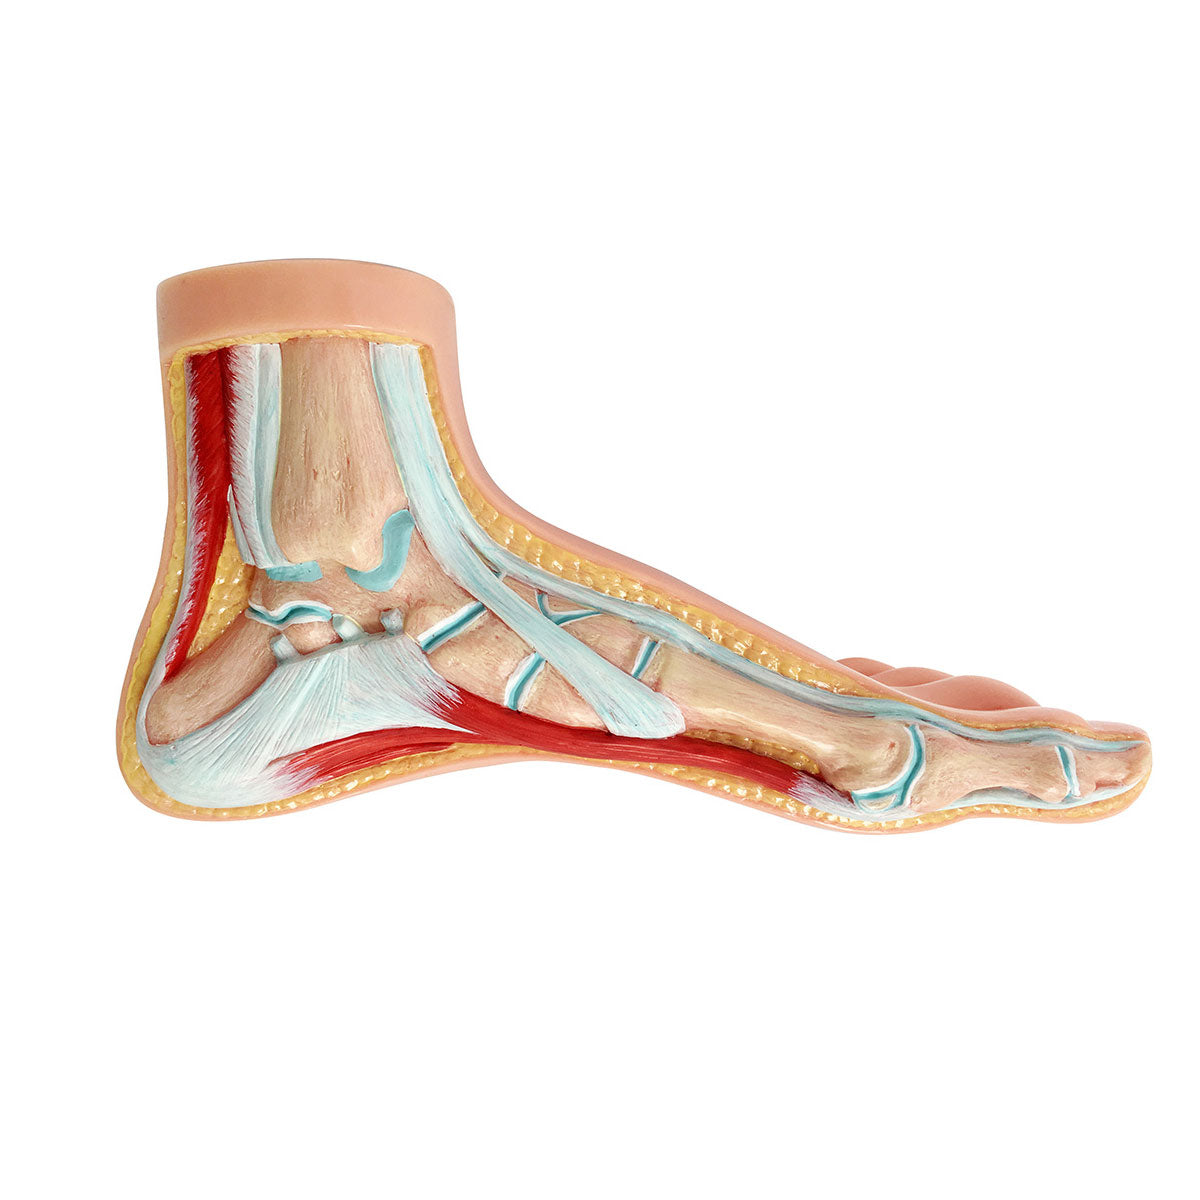 Evotech Scientific Podiatry normal foot Anatomy Models